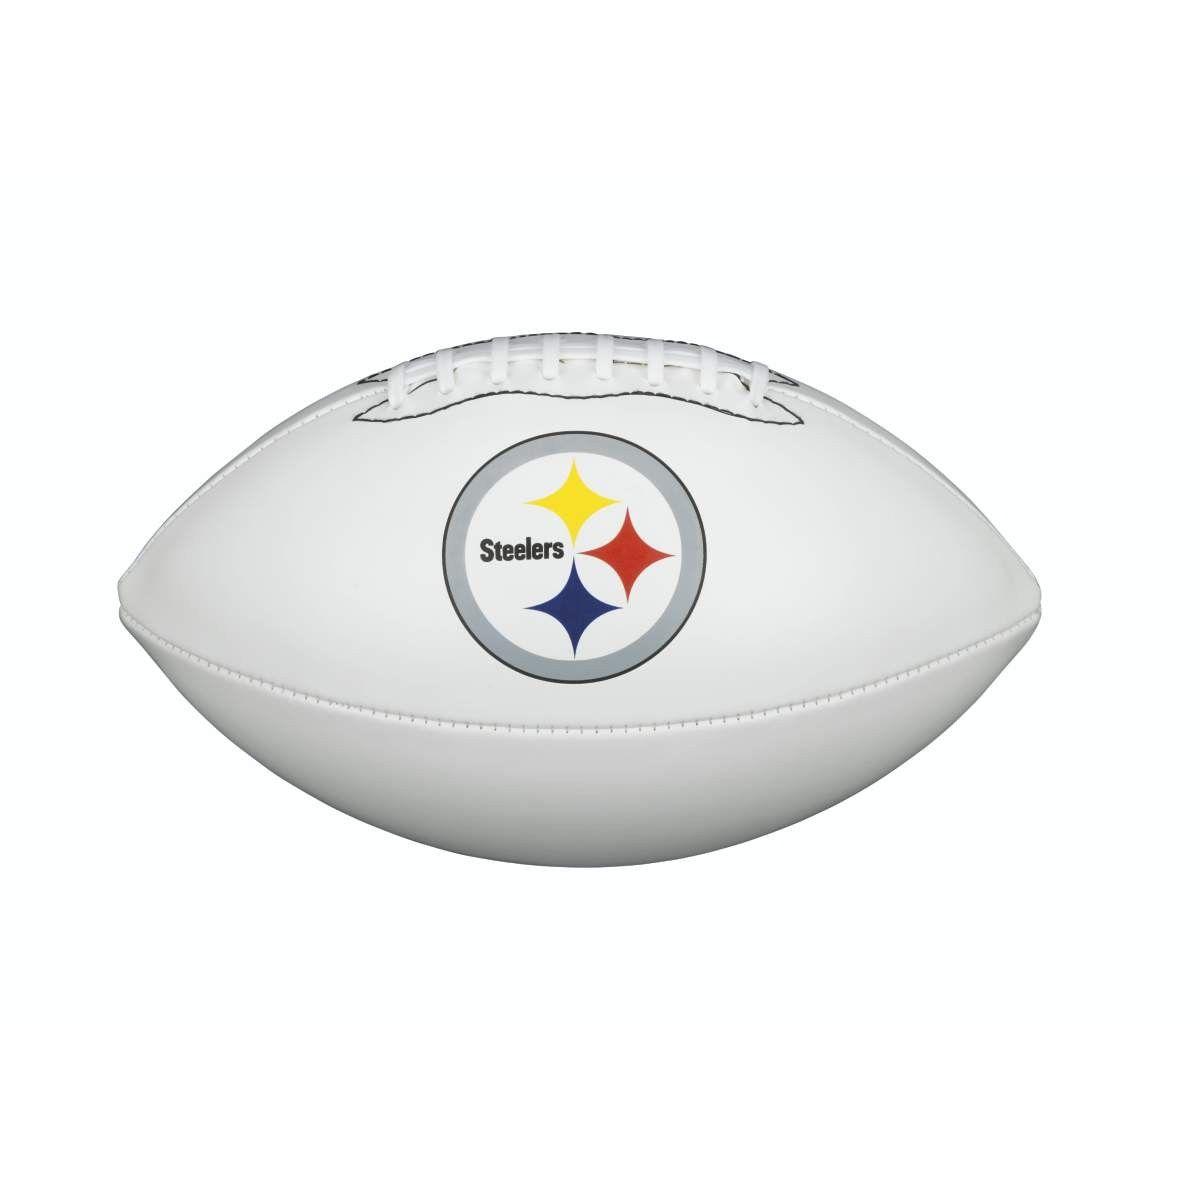 Steelers Football Logo - NFL TEAM LOGO AUTOGRAPH FOOTBALL - OFFICIAL, PITTSBURGH STEELERS ...